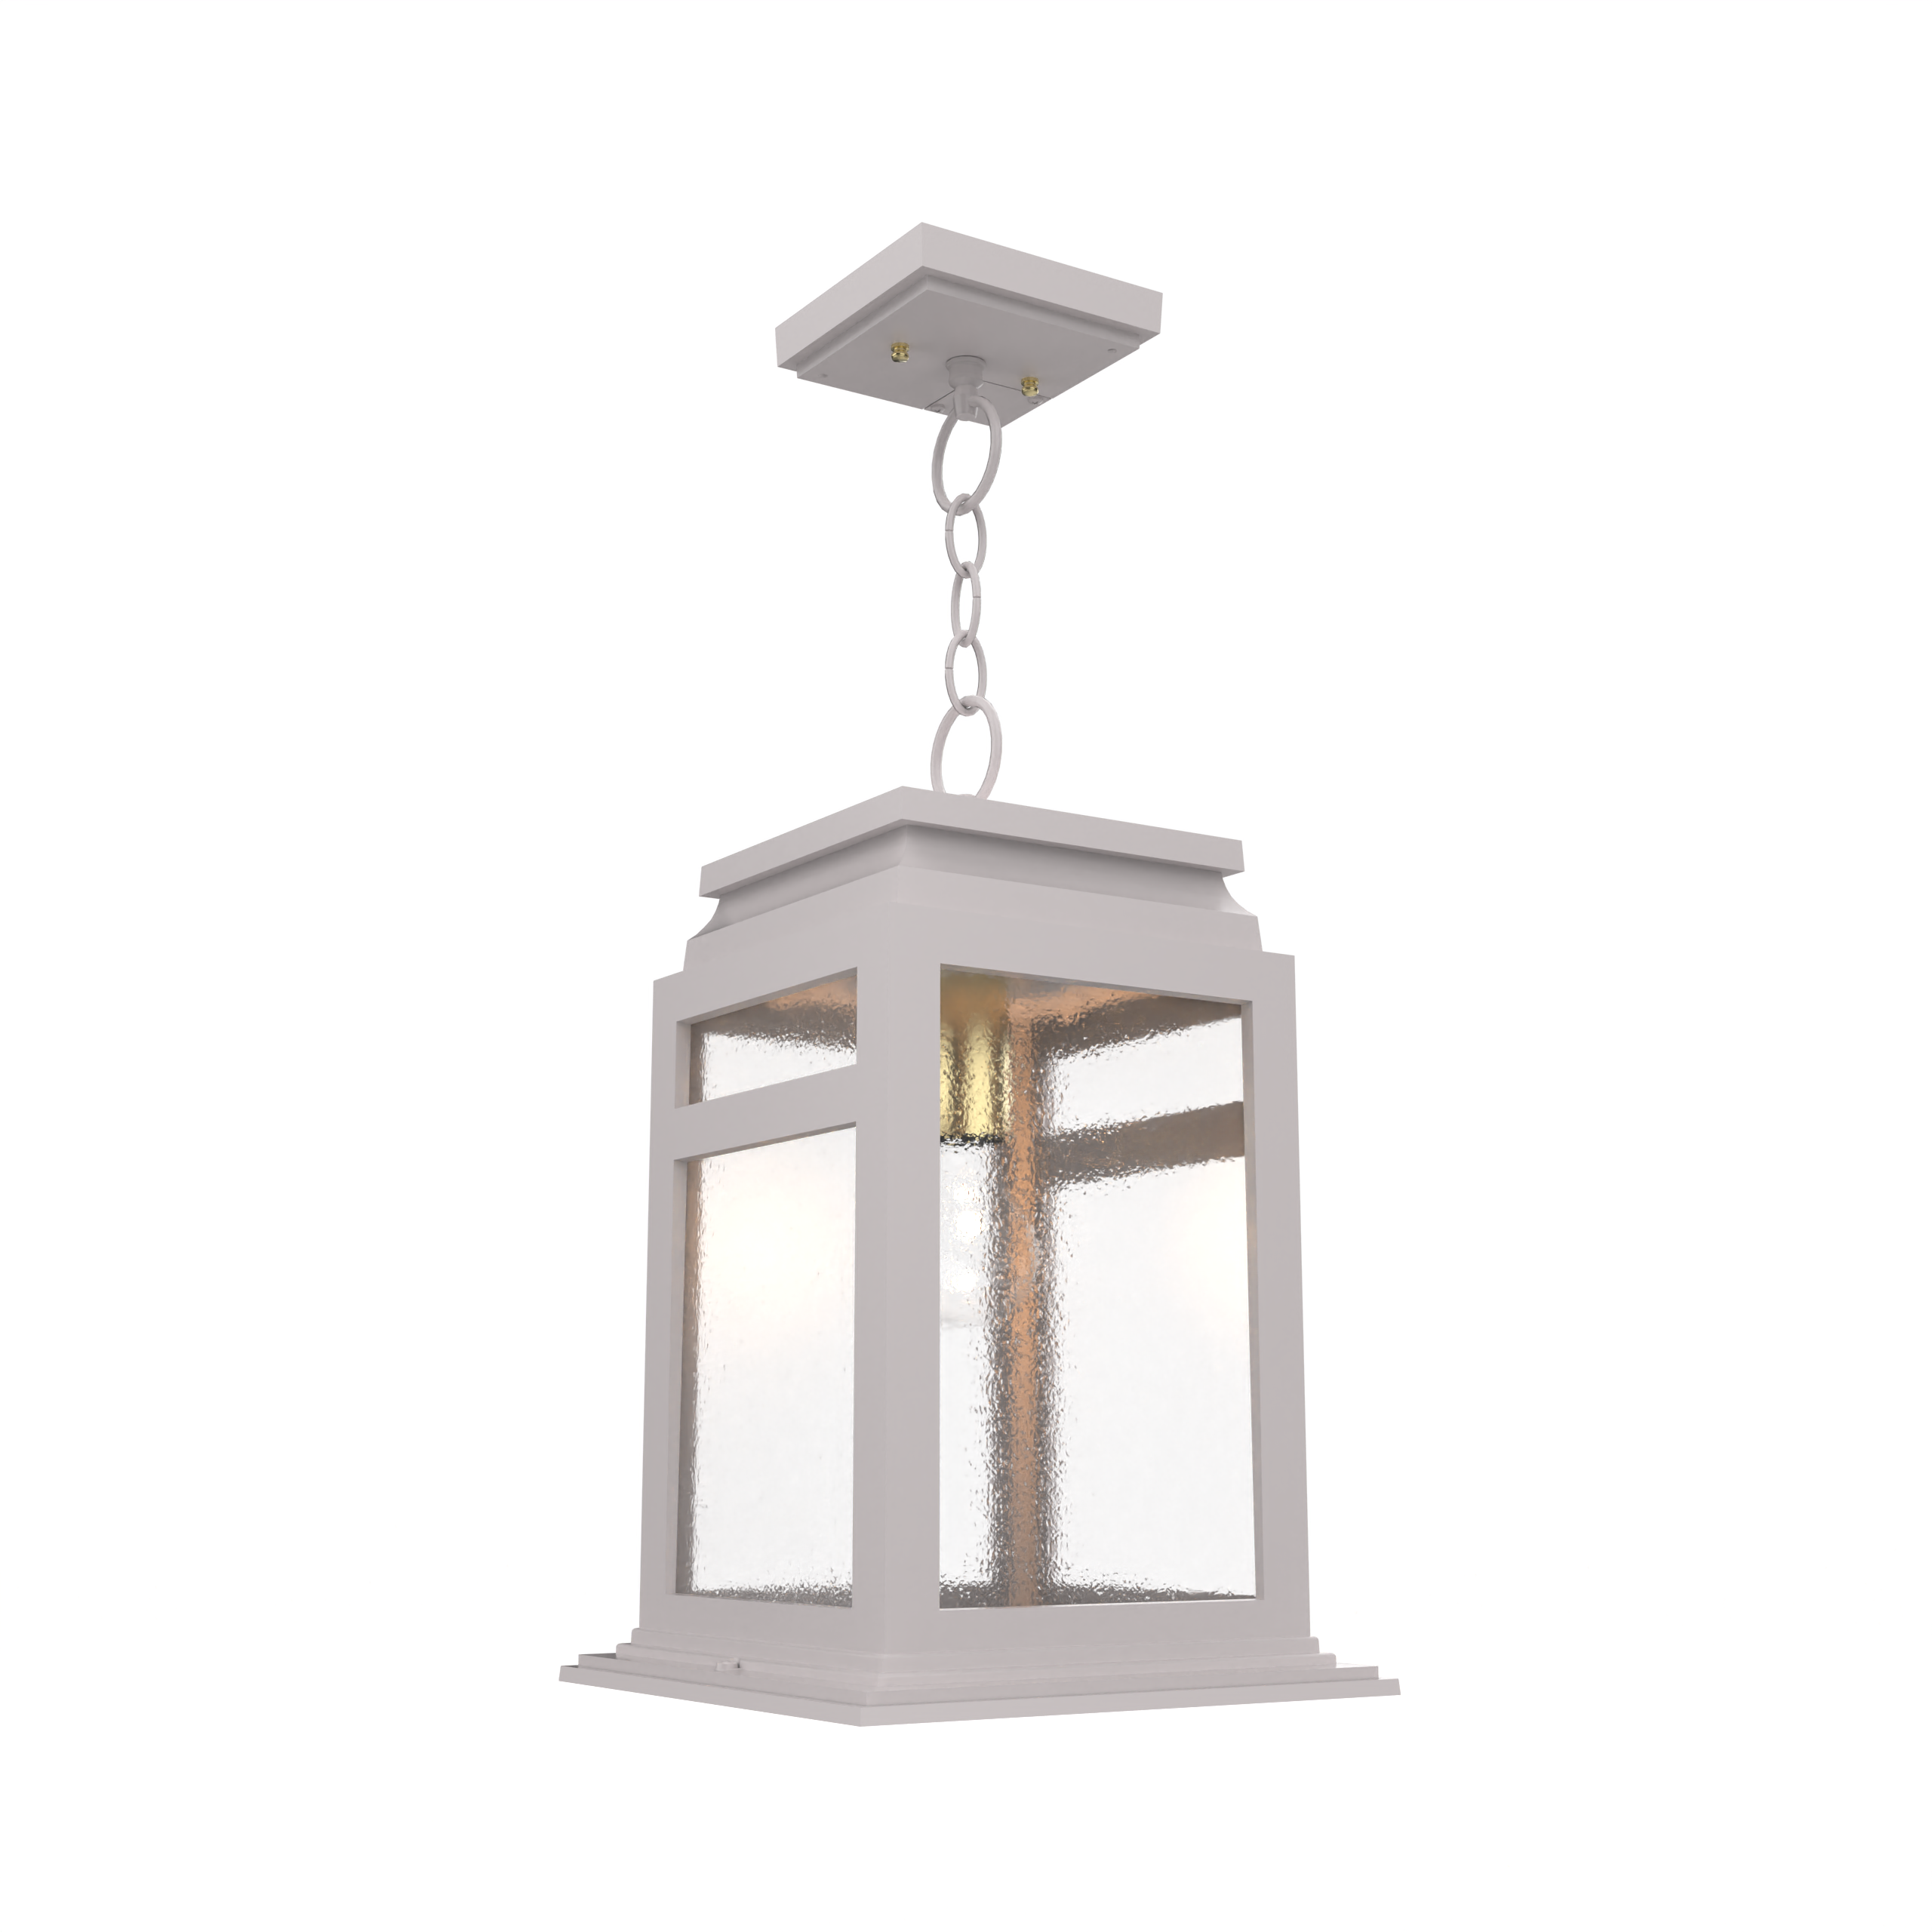 Serie 65e - Ceiling mount on chain medium format - 26650